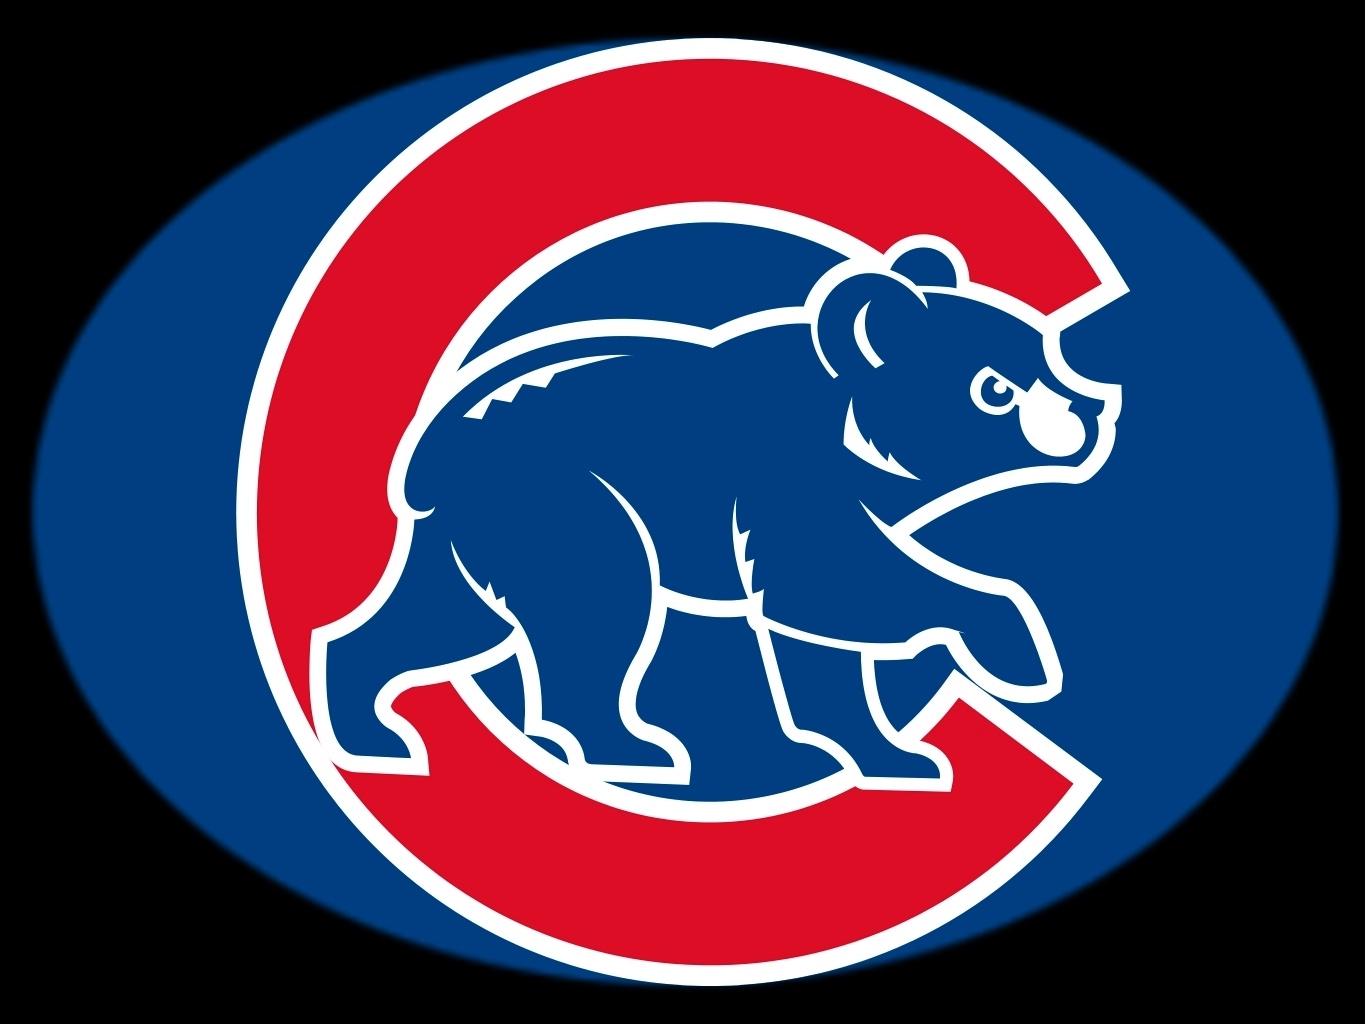 Chicago Cubs Desktop Wallpaper